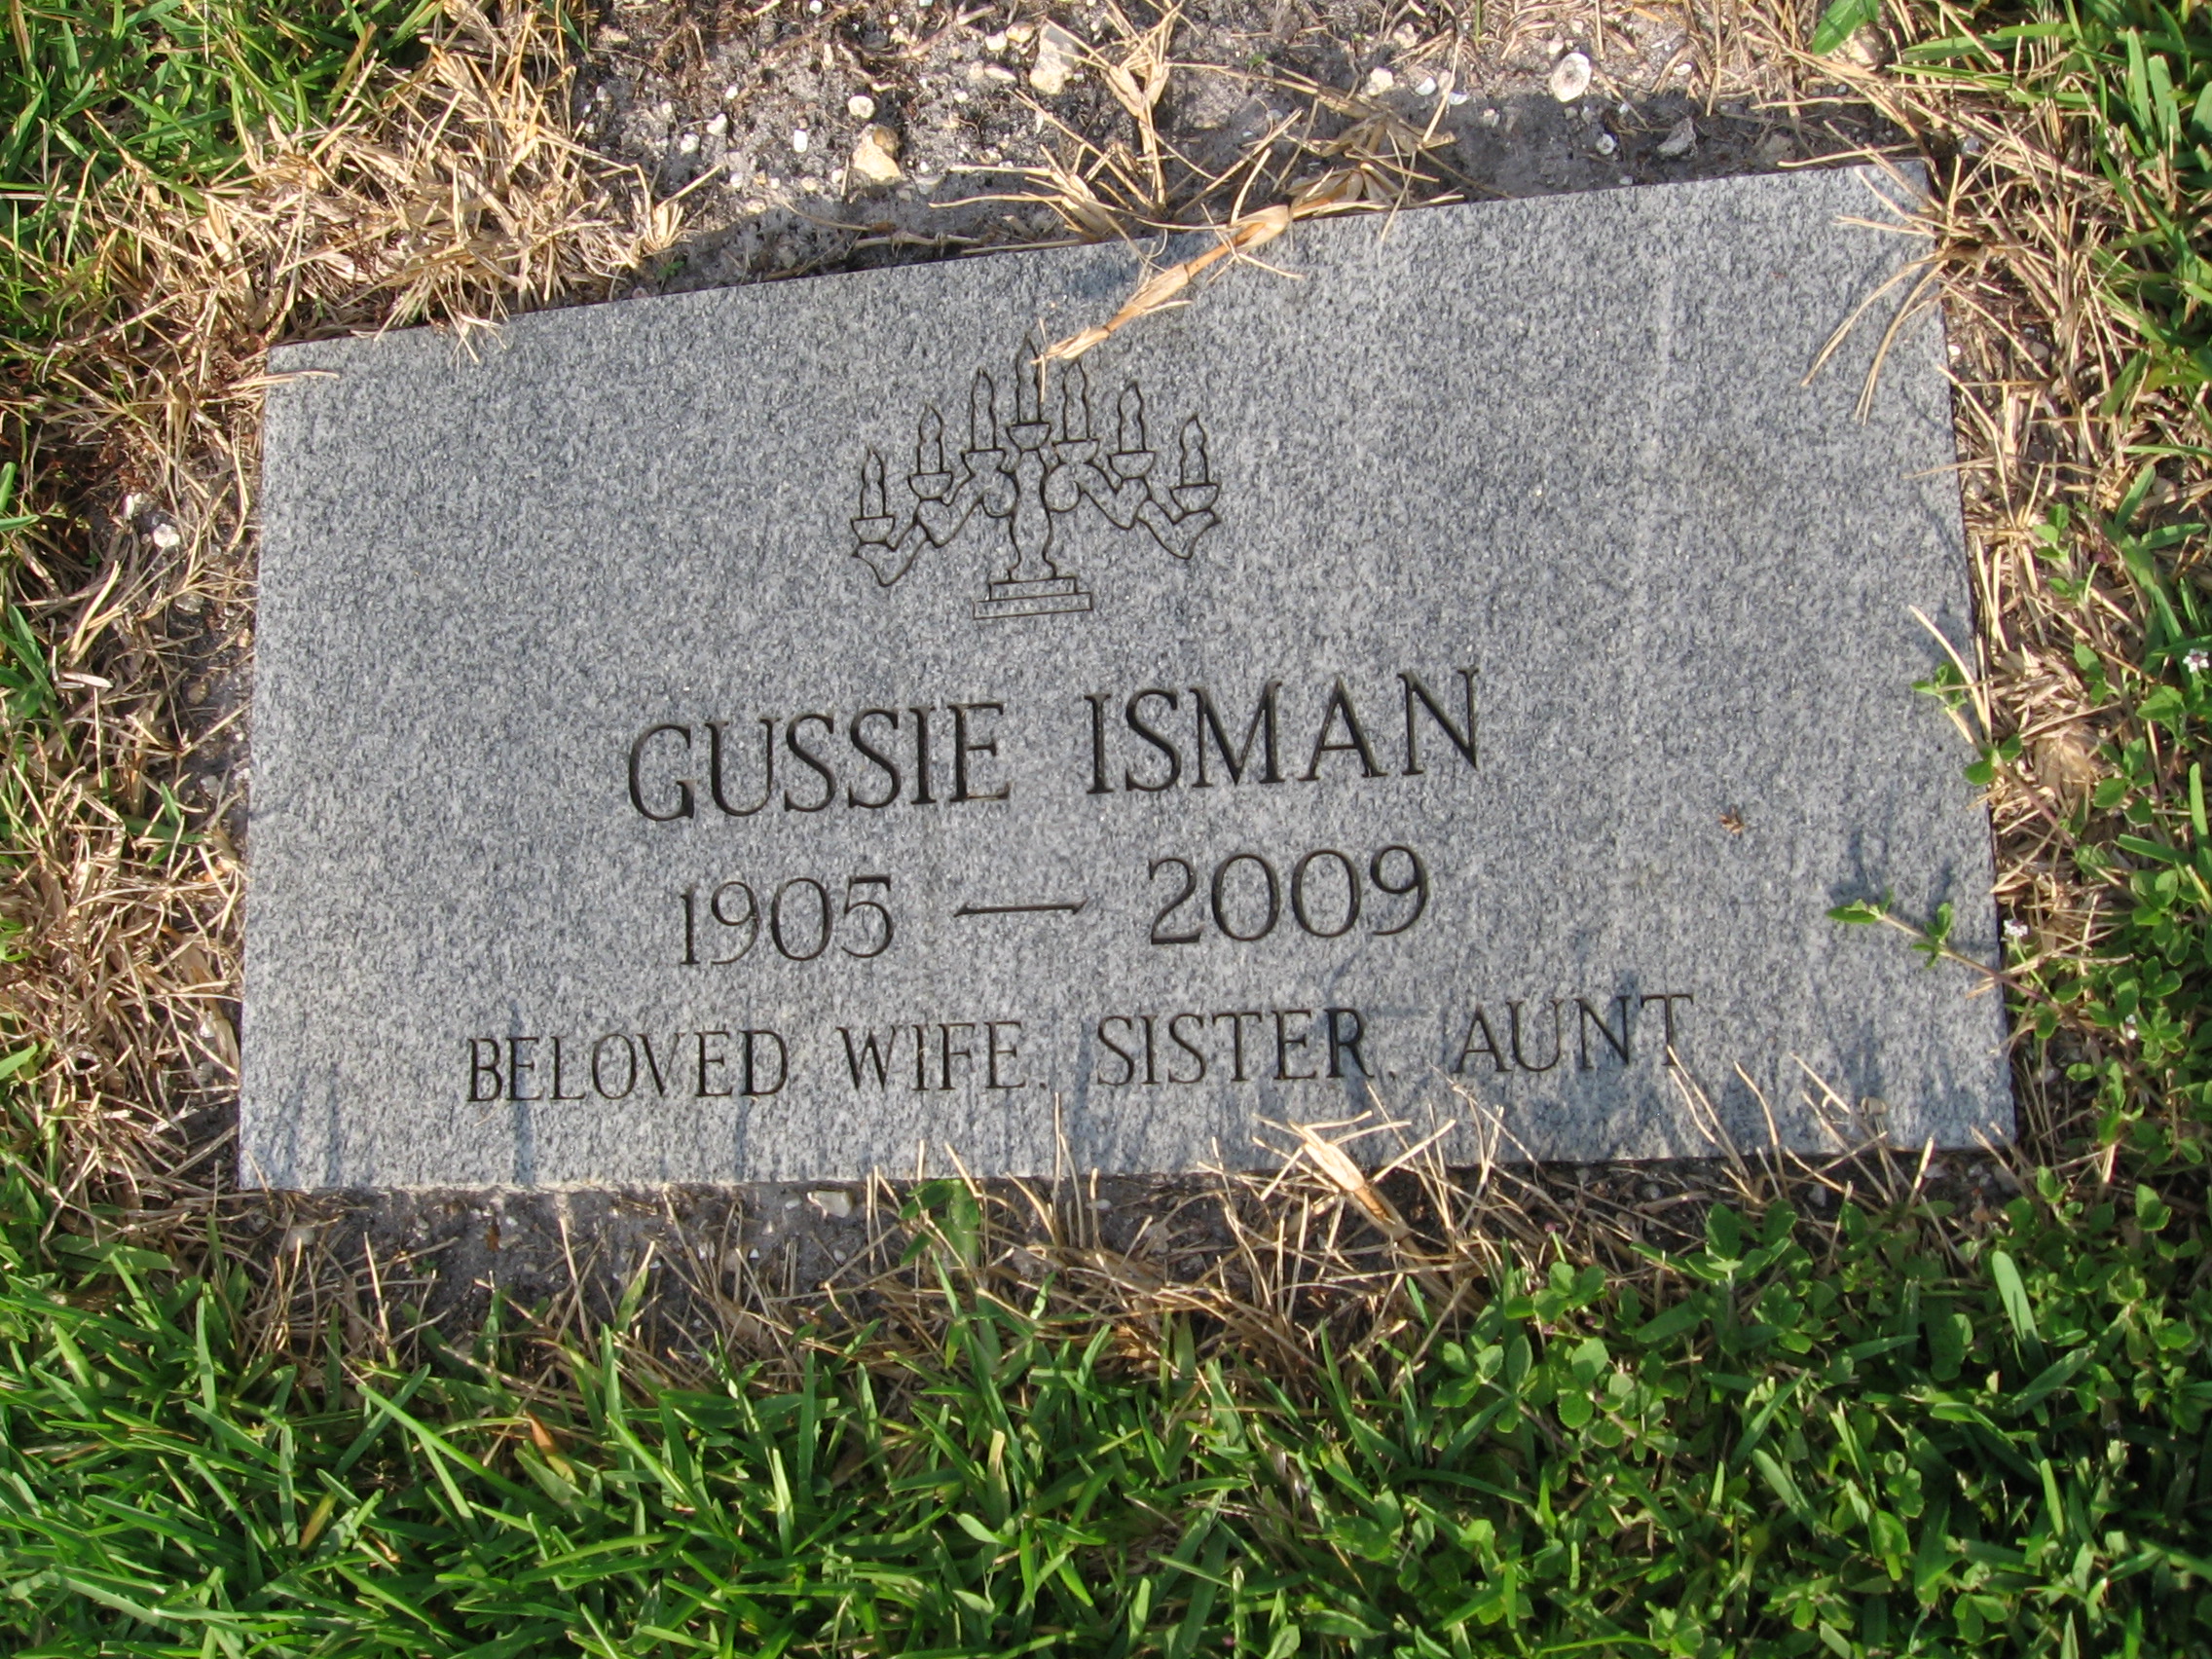 Gussie Isman